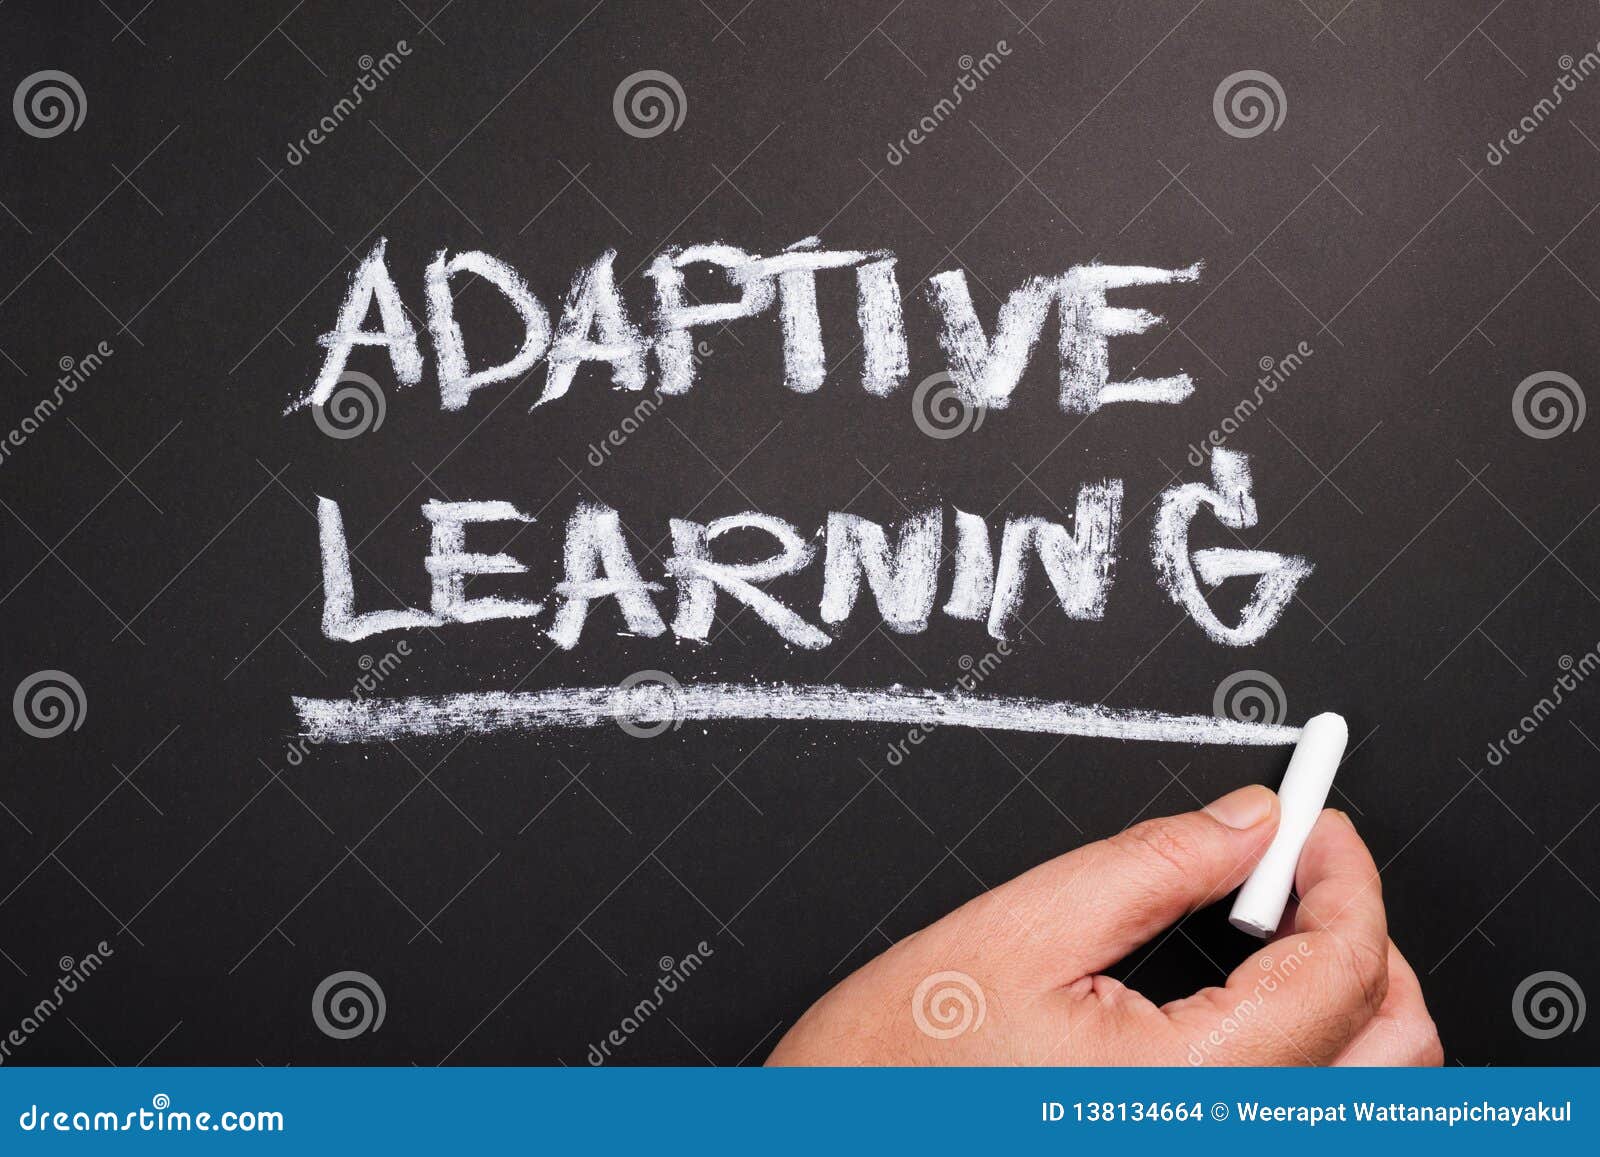 adaptive learning on chalkboard